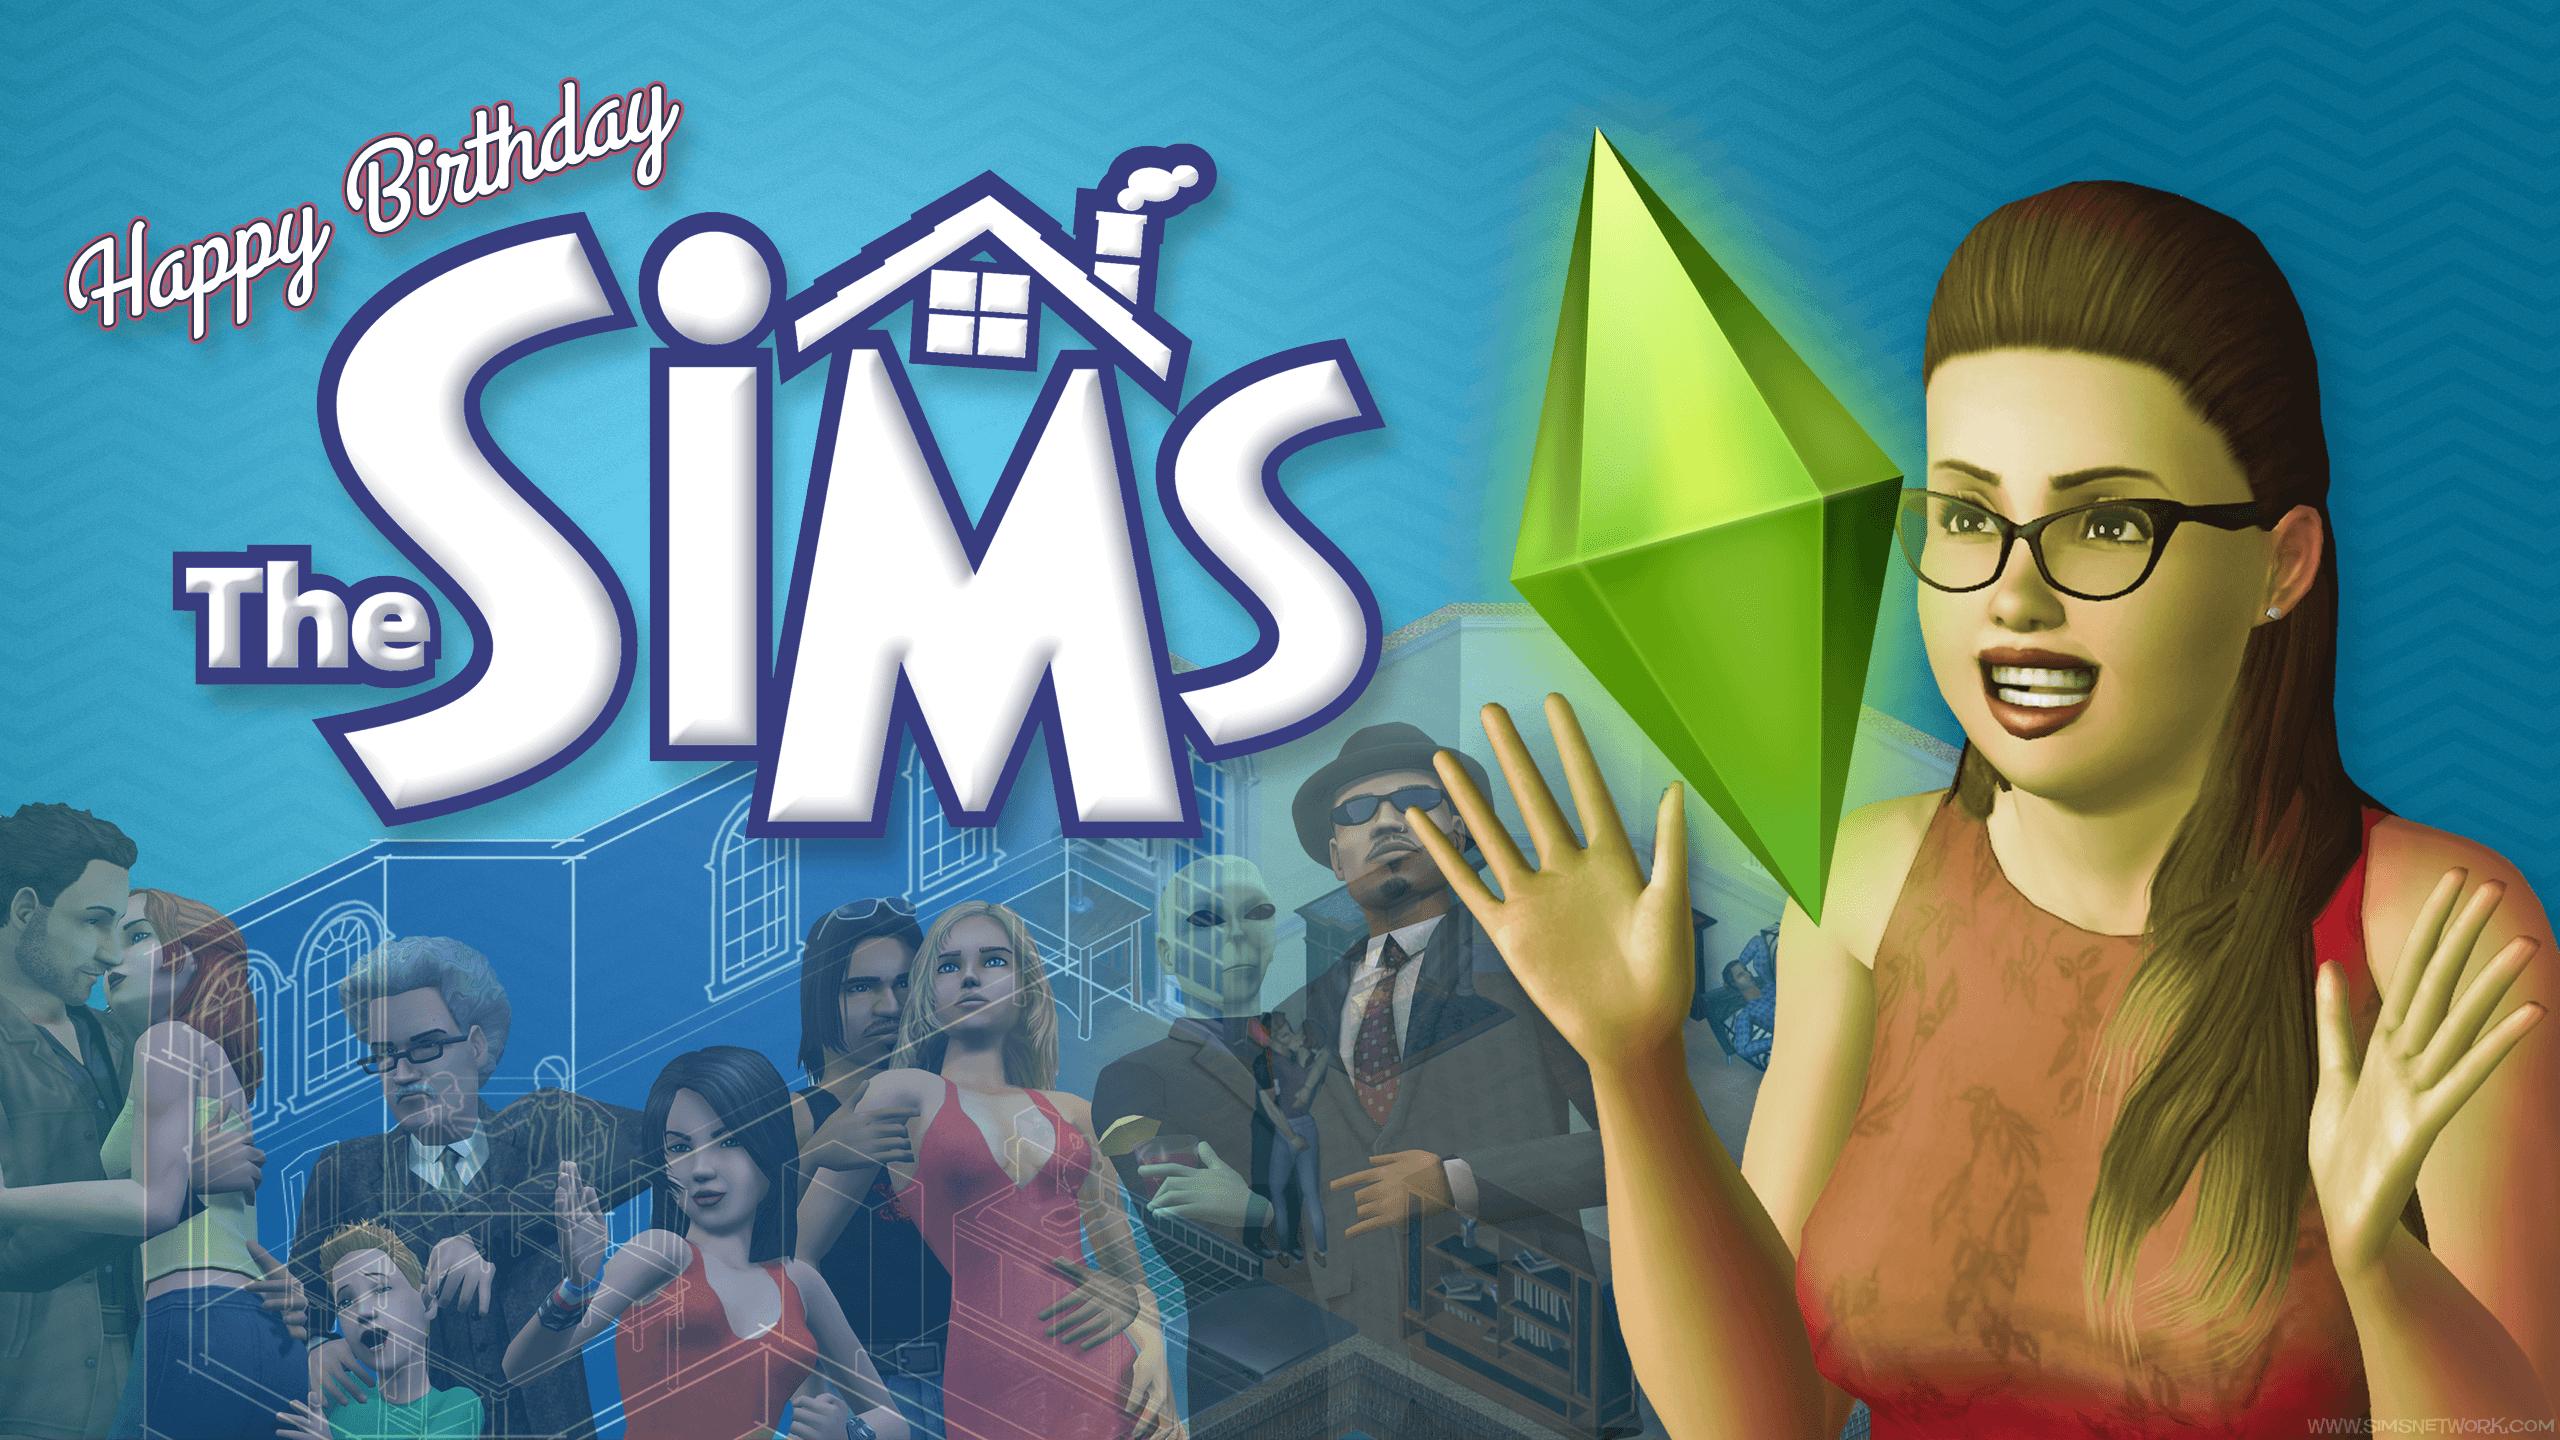 The Sims Full Hd Wallpaper 4k